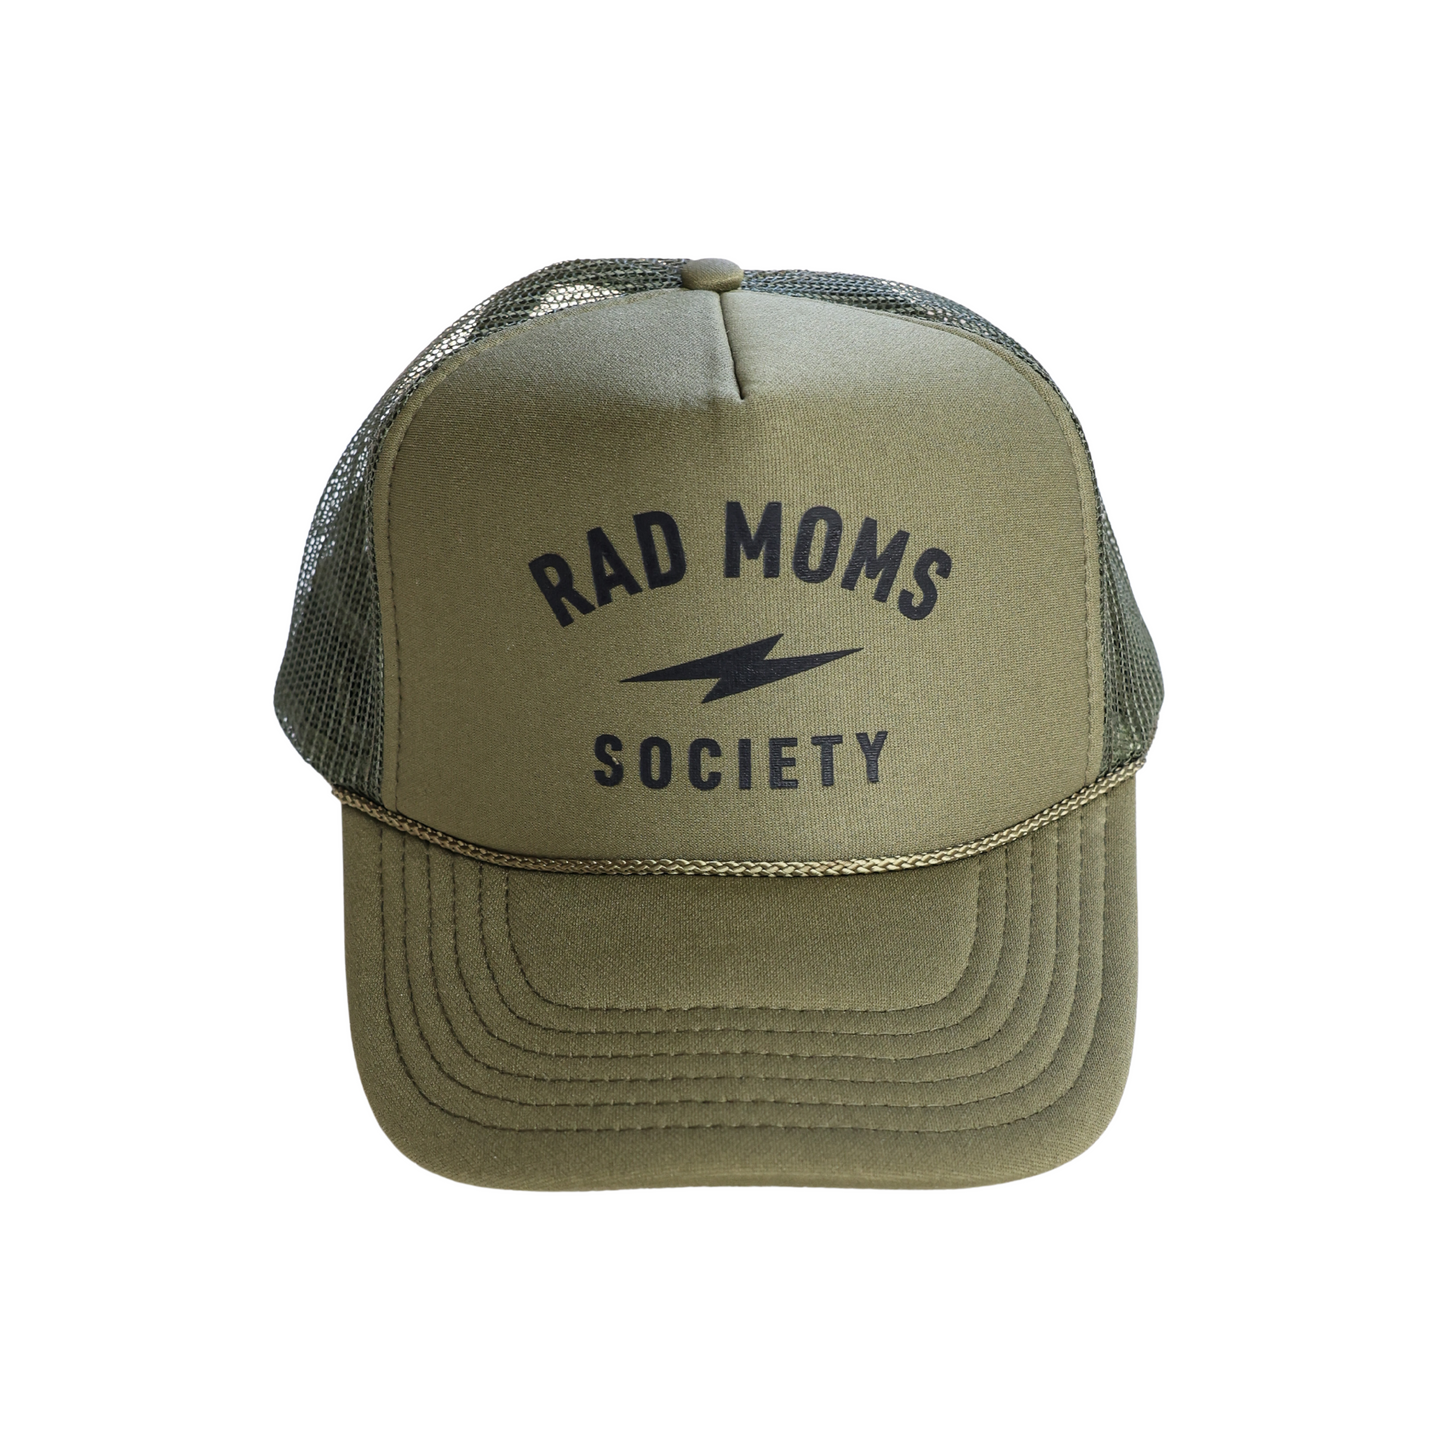 RAD MOMS SOCIETY- OLIVE